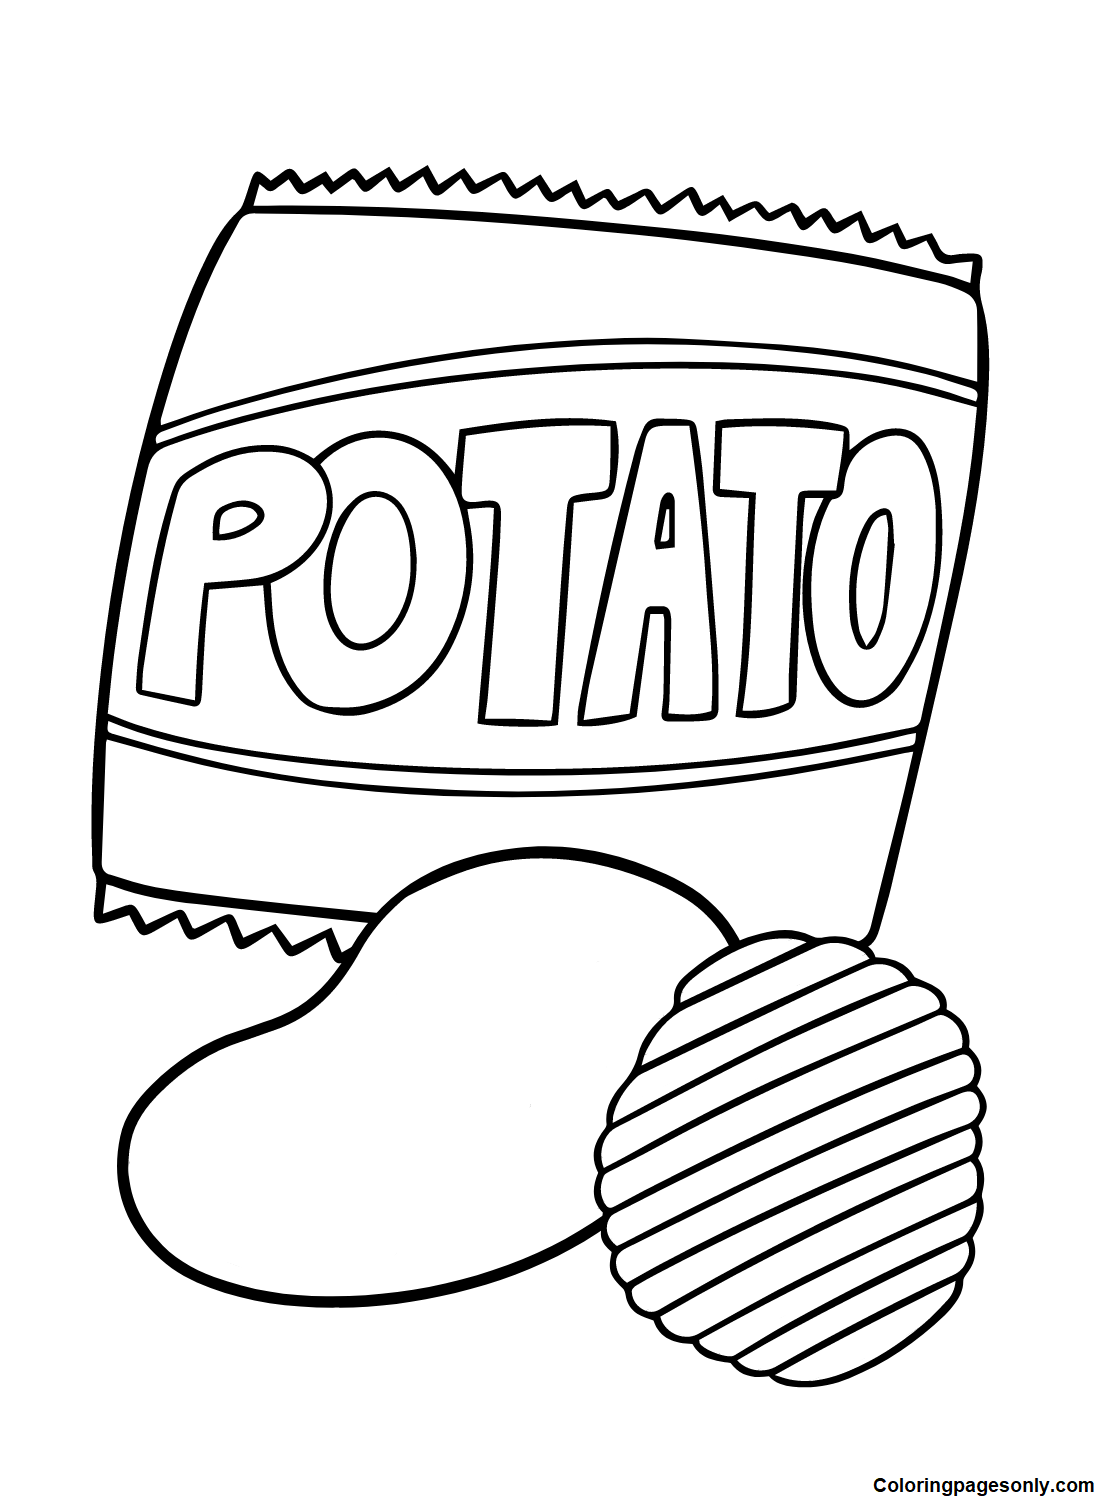 Chip and Potato from Potato